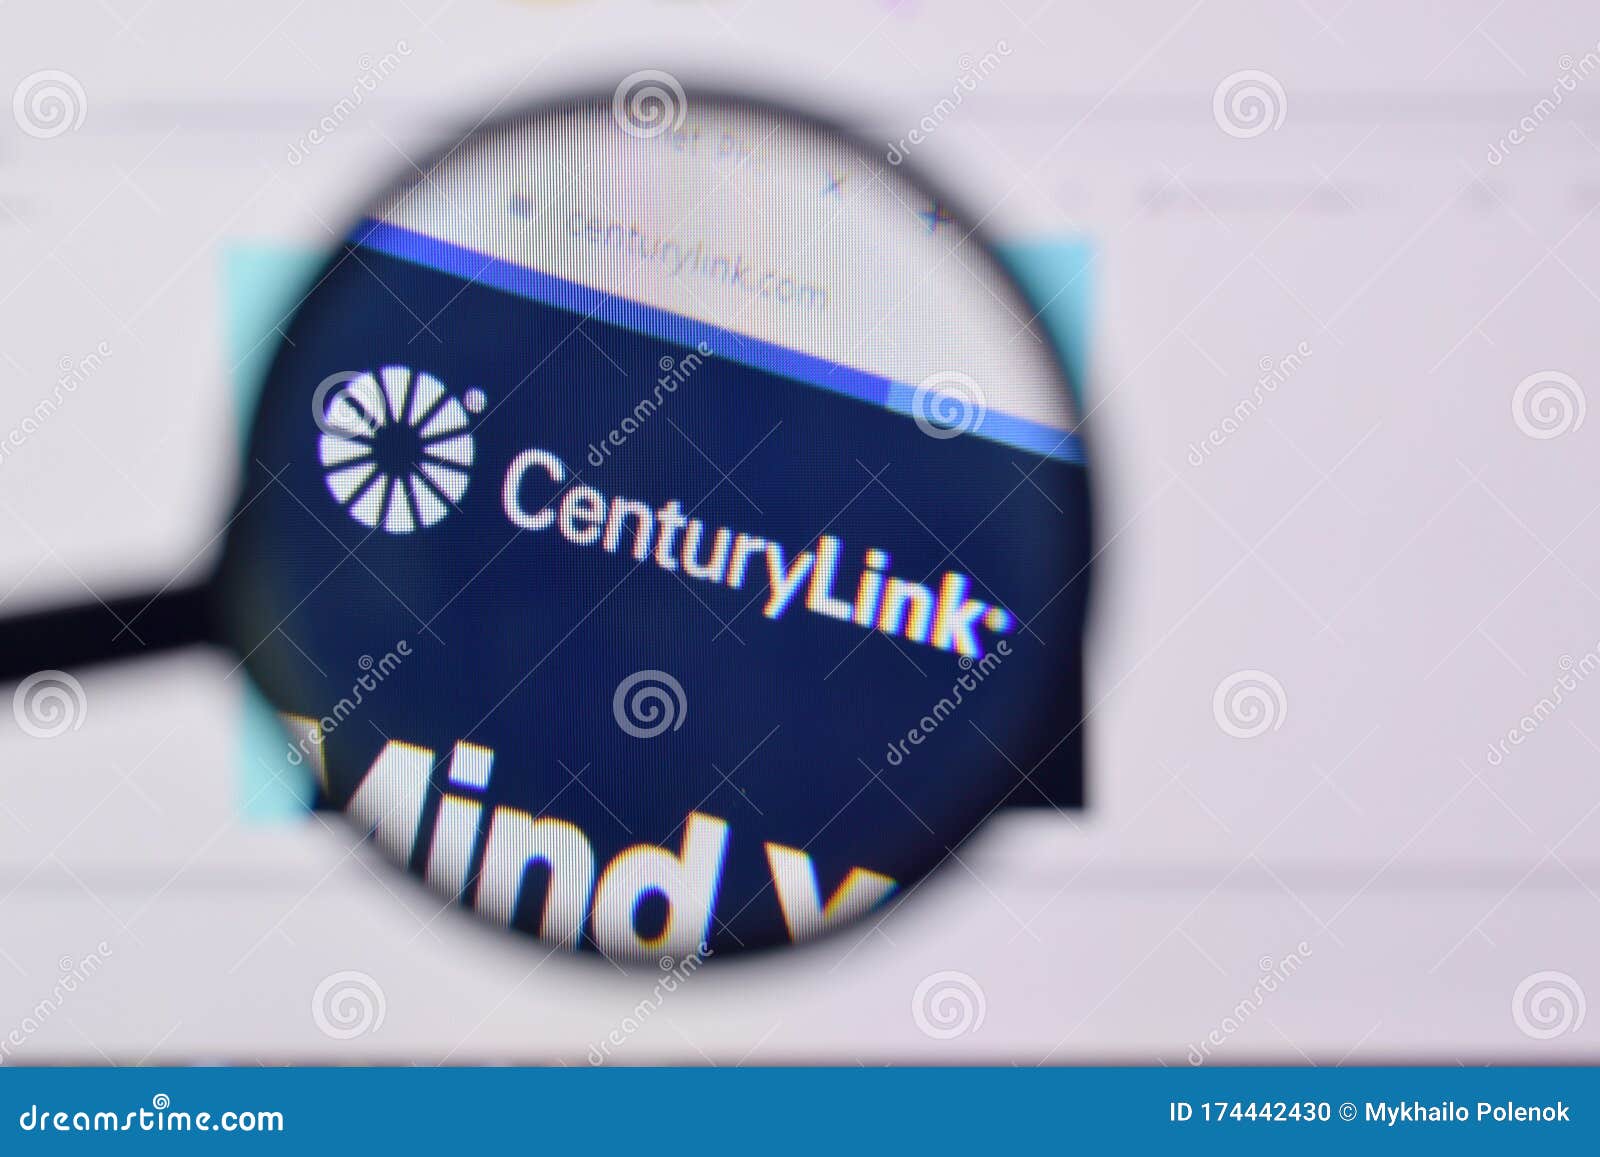 CenturyLink to become Lumen, Quantum (and CenturyLink)